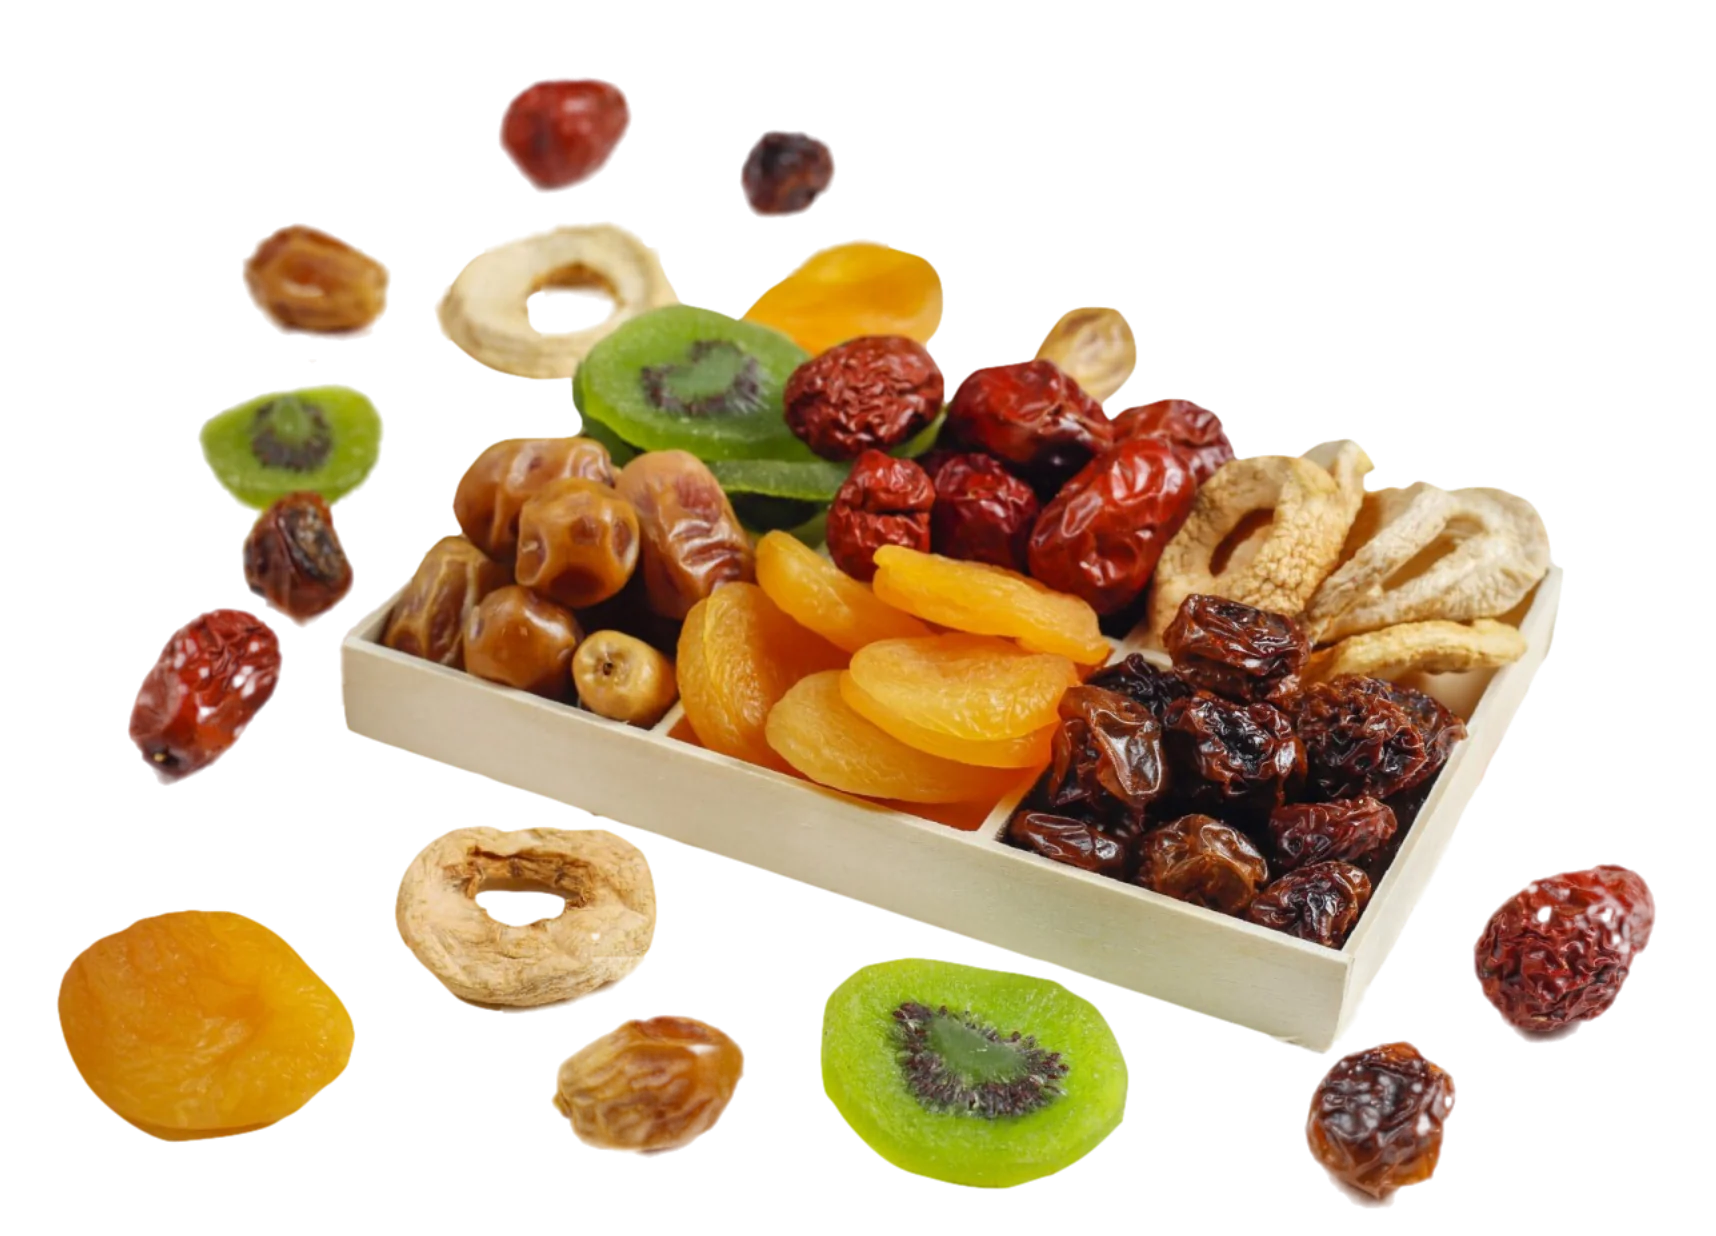 Dried Fruits